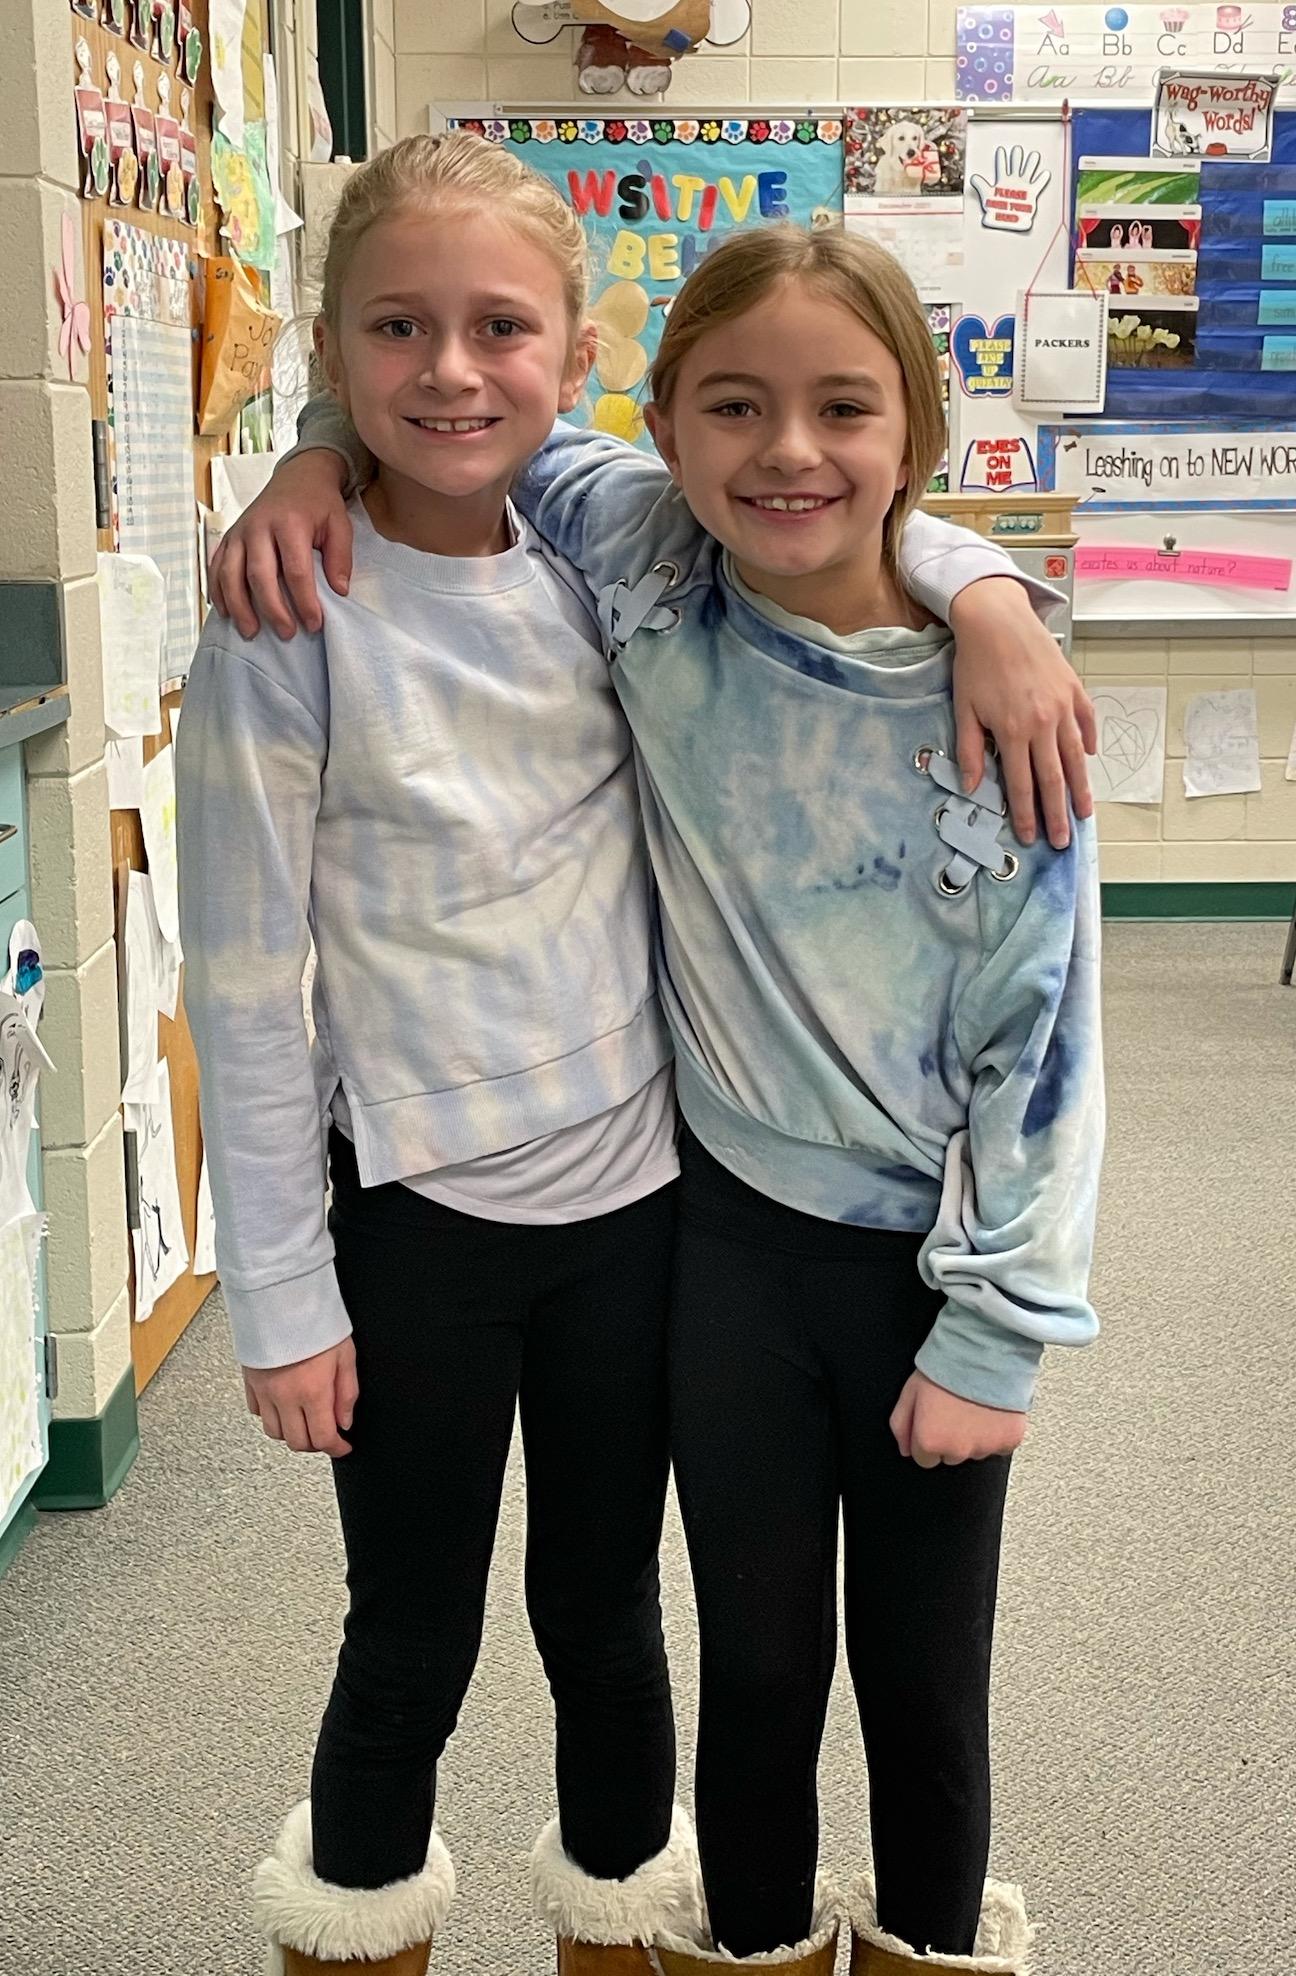 Trafford Elementary students dress as twins